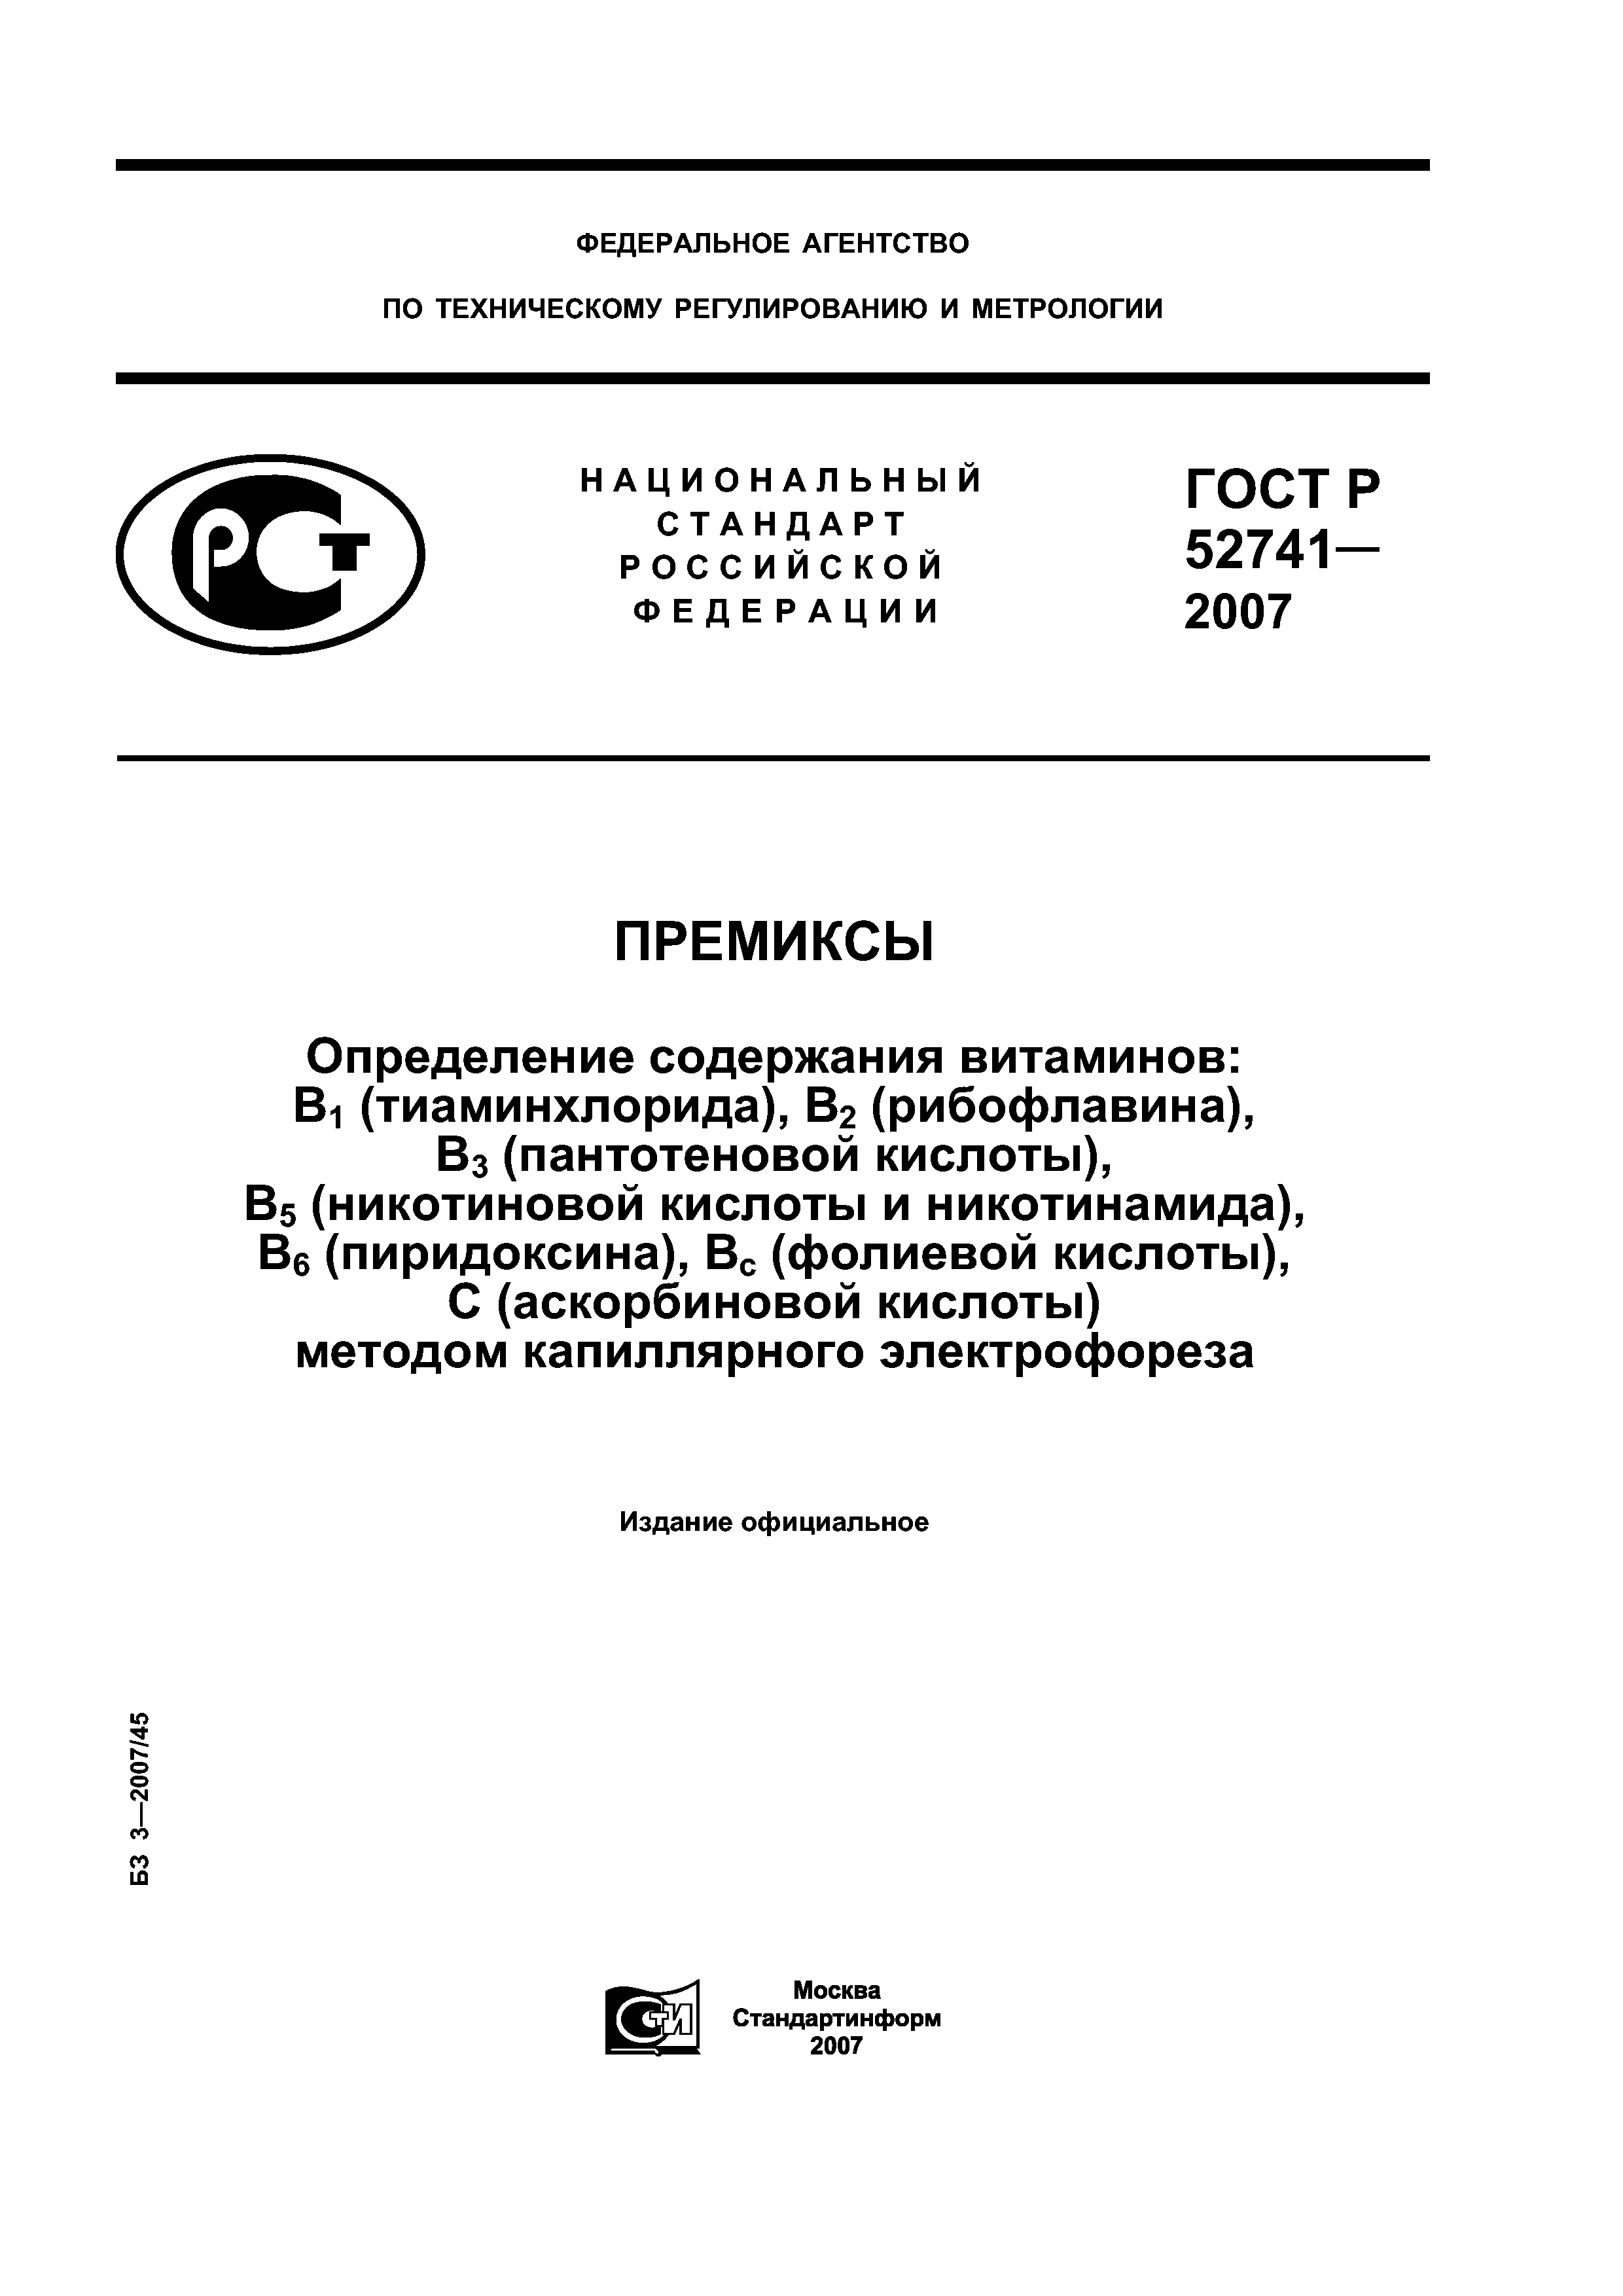 ГОСТ Р 52741-2007